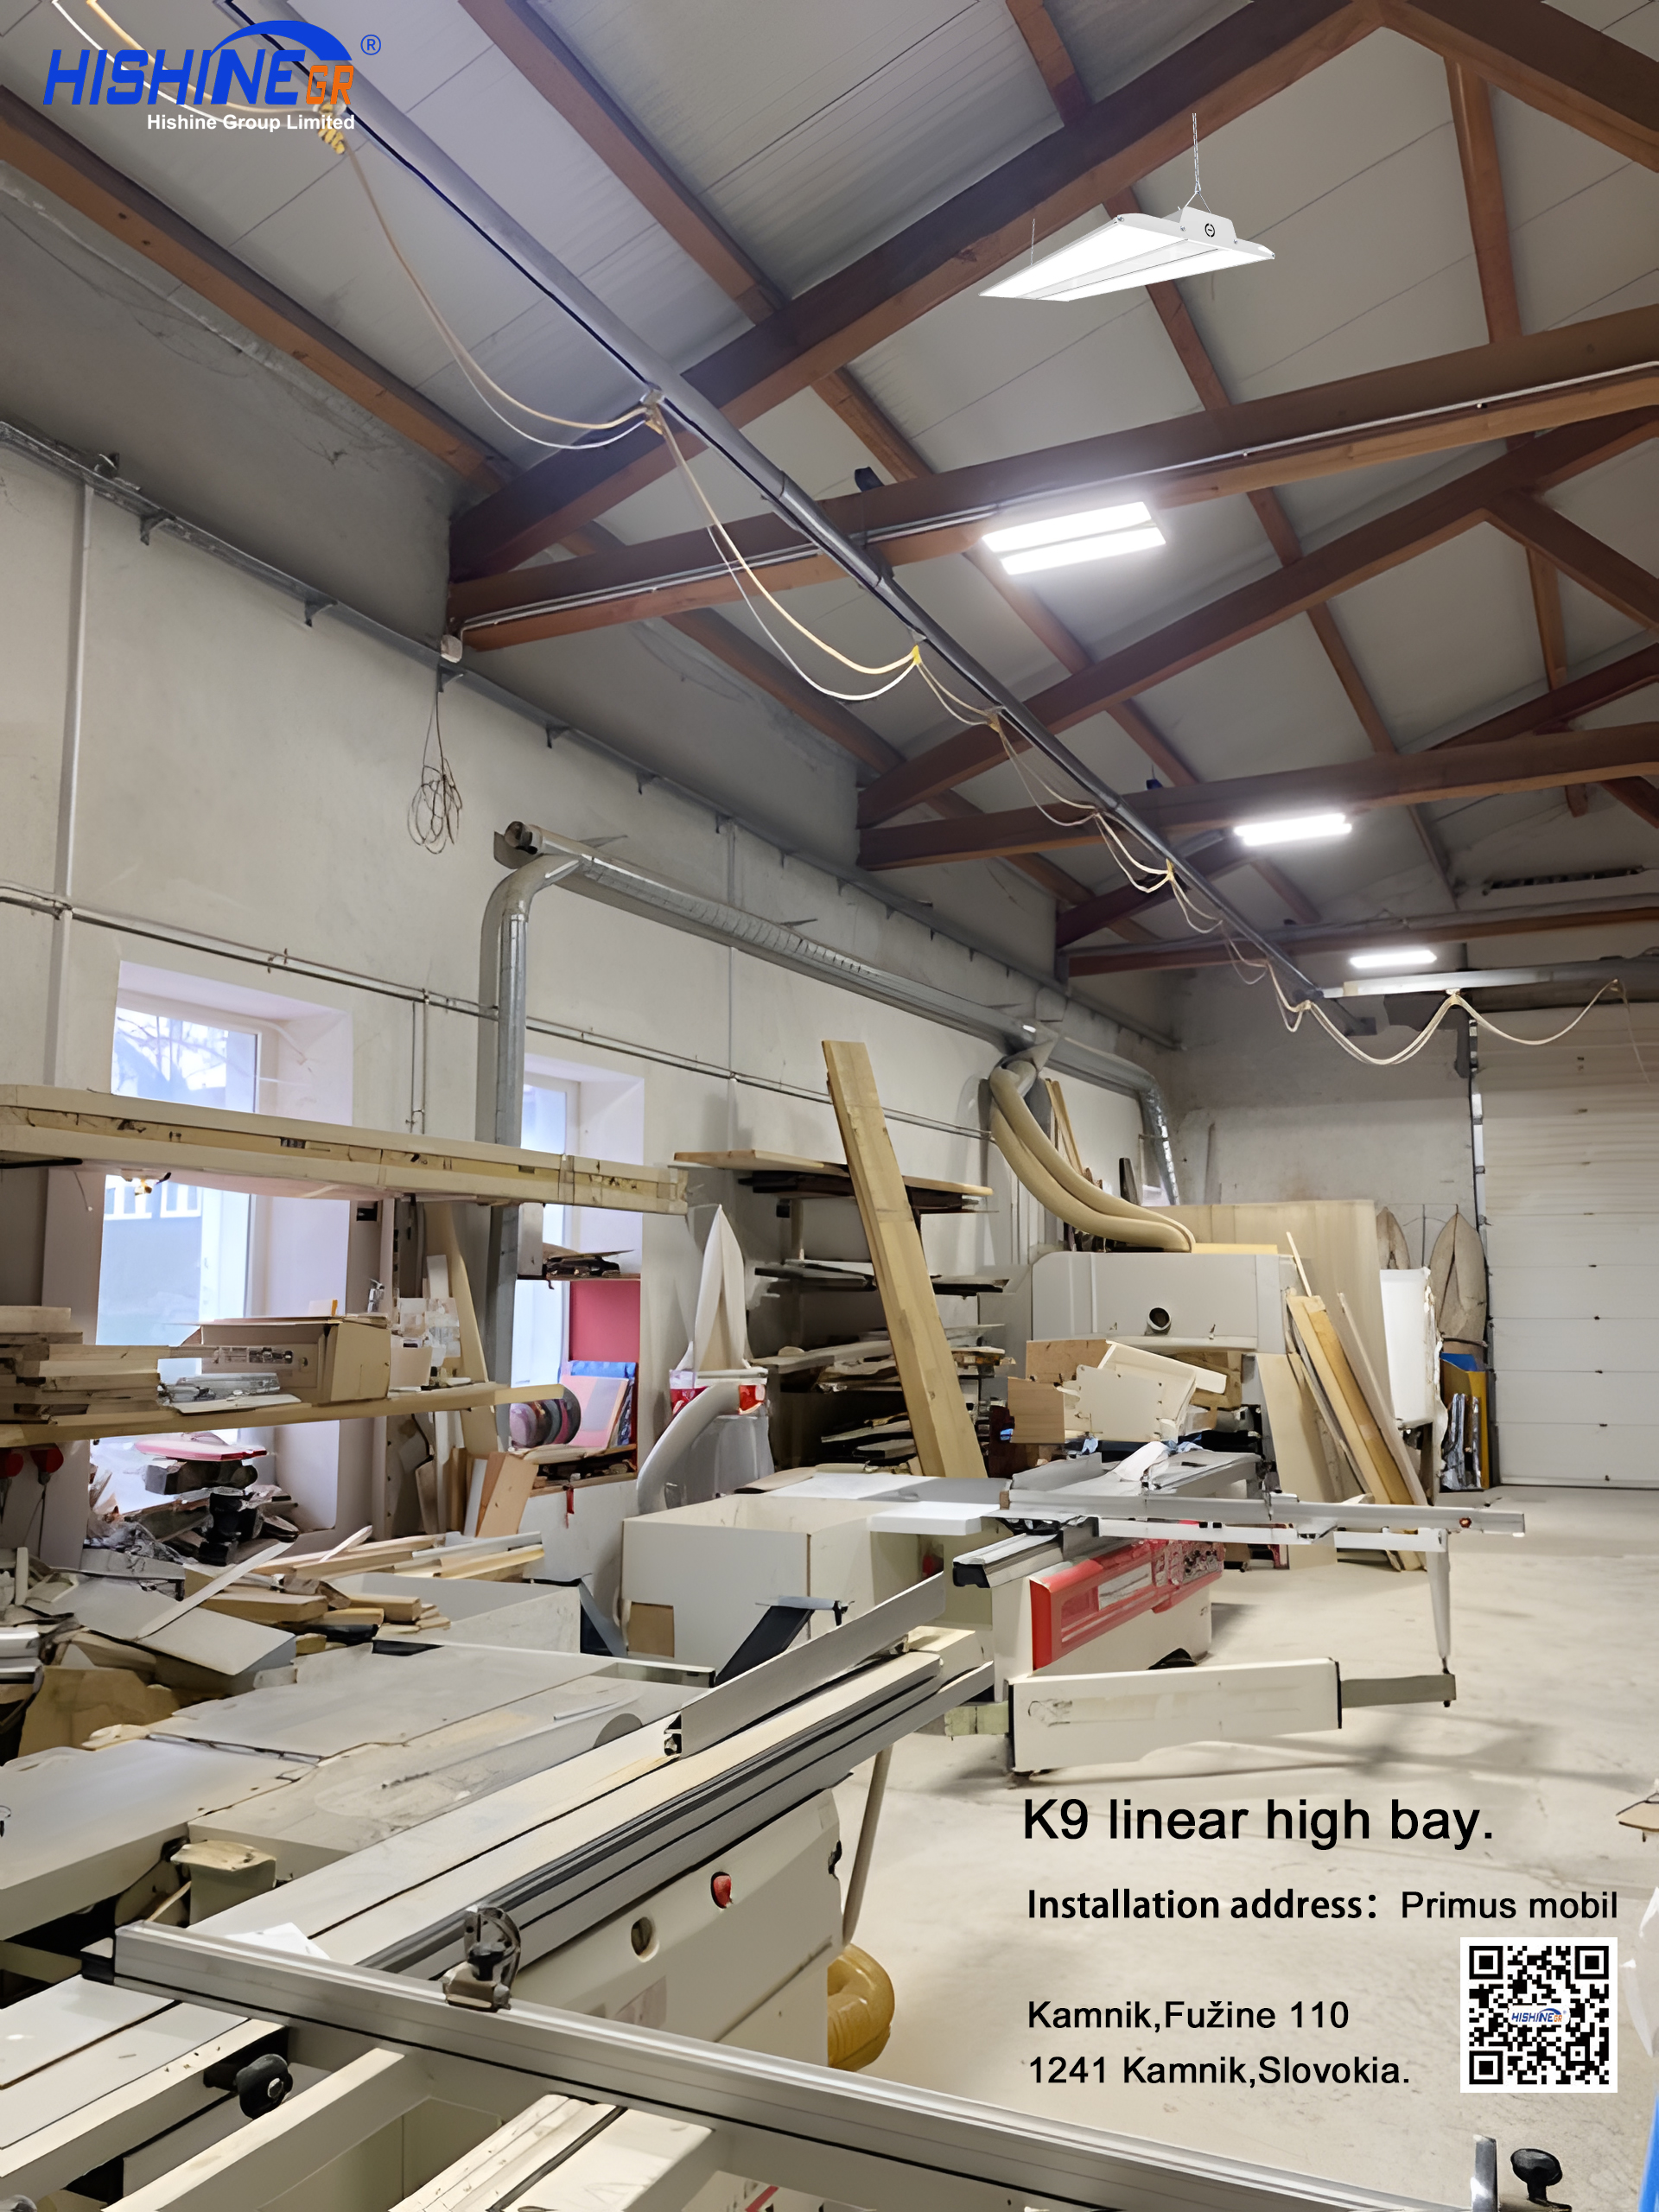 Workshop Lighting Project Hishine K9 led high bay light